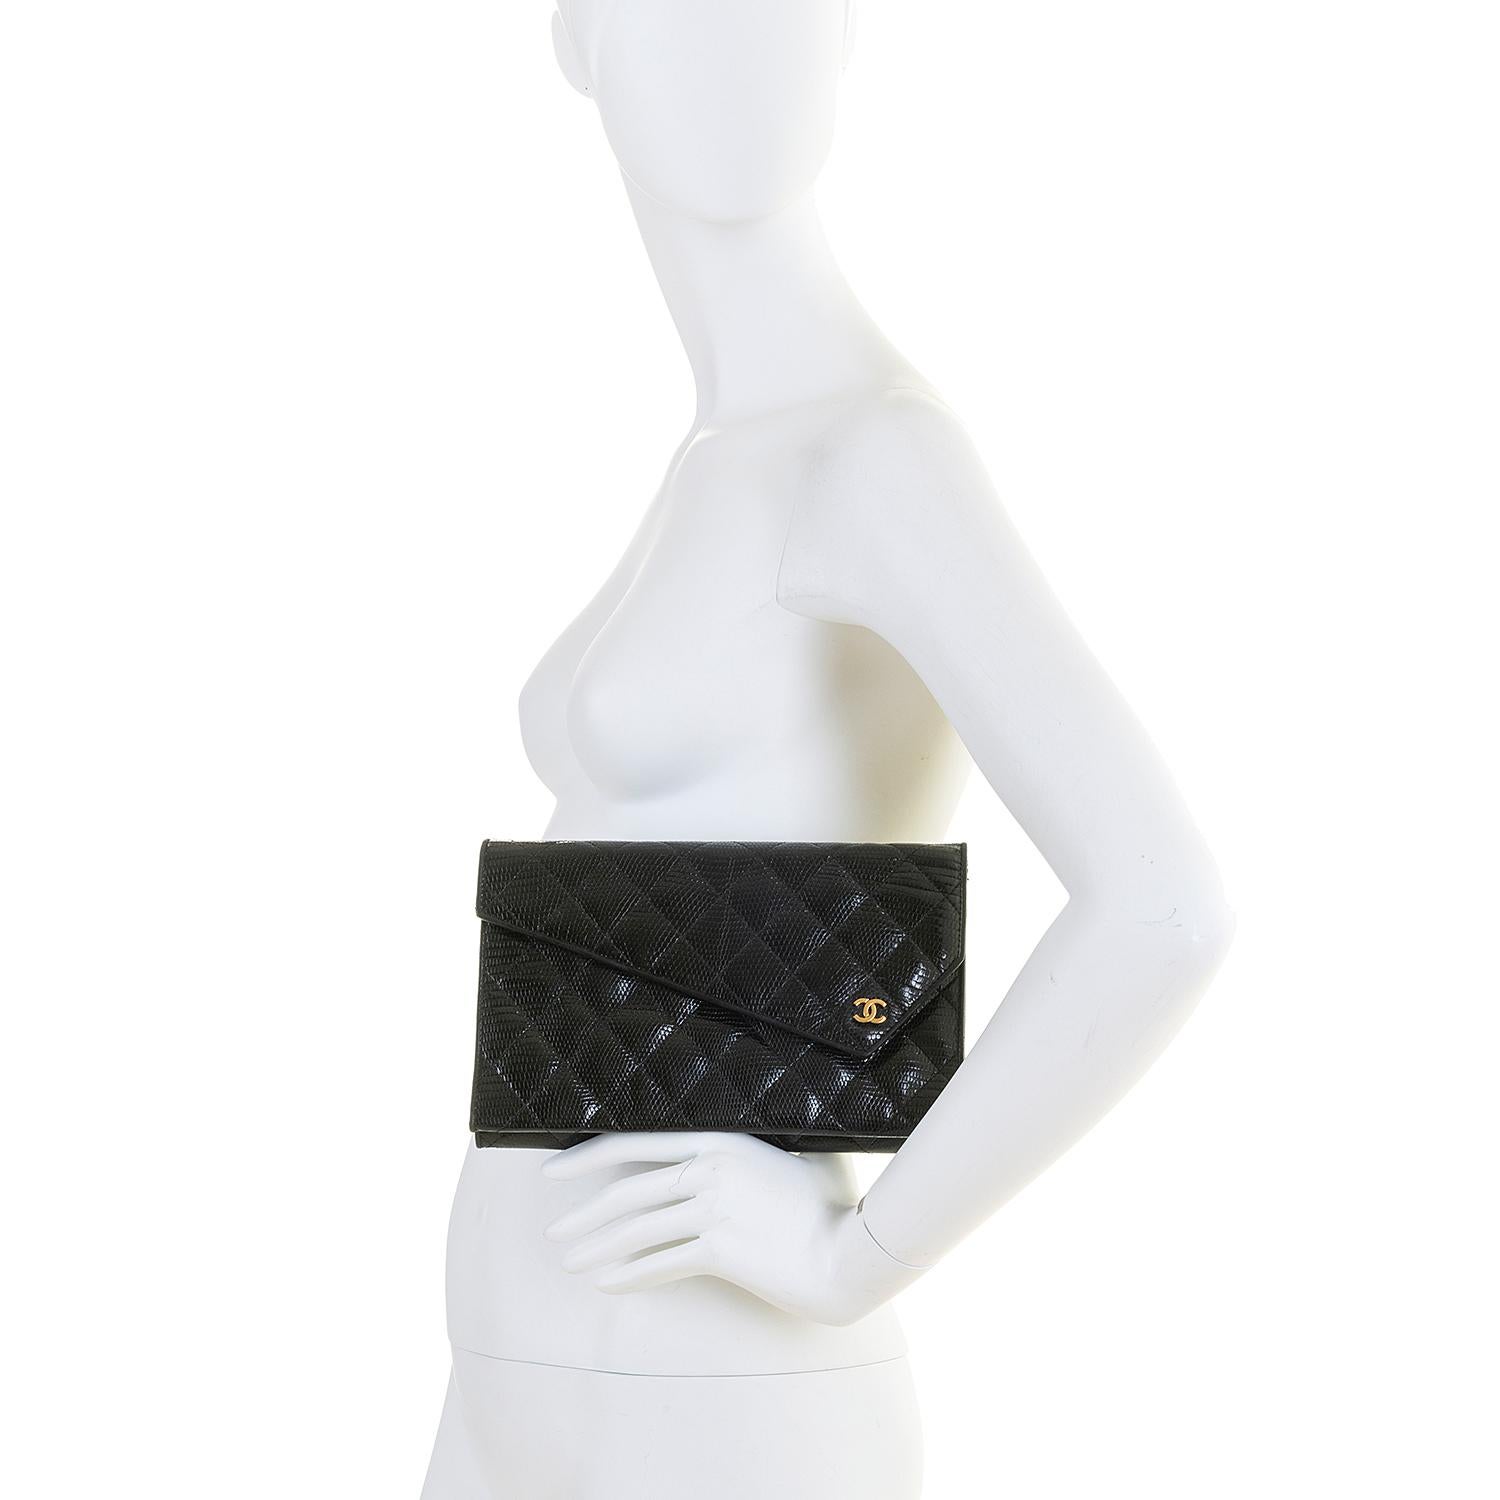 Rare Vintage Chanel Black Lizard Evening Bag by Karl Lagerfeld For Sale 3